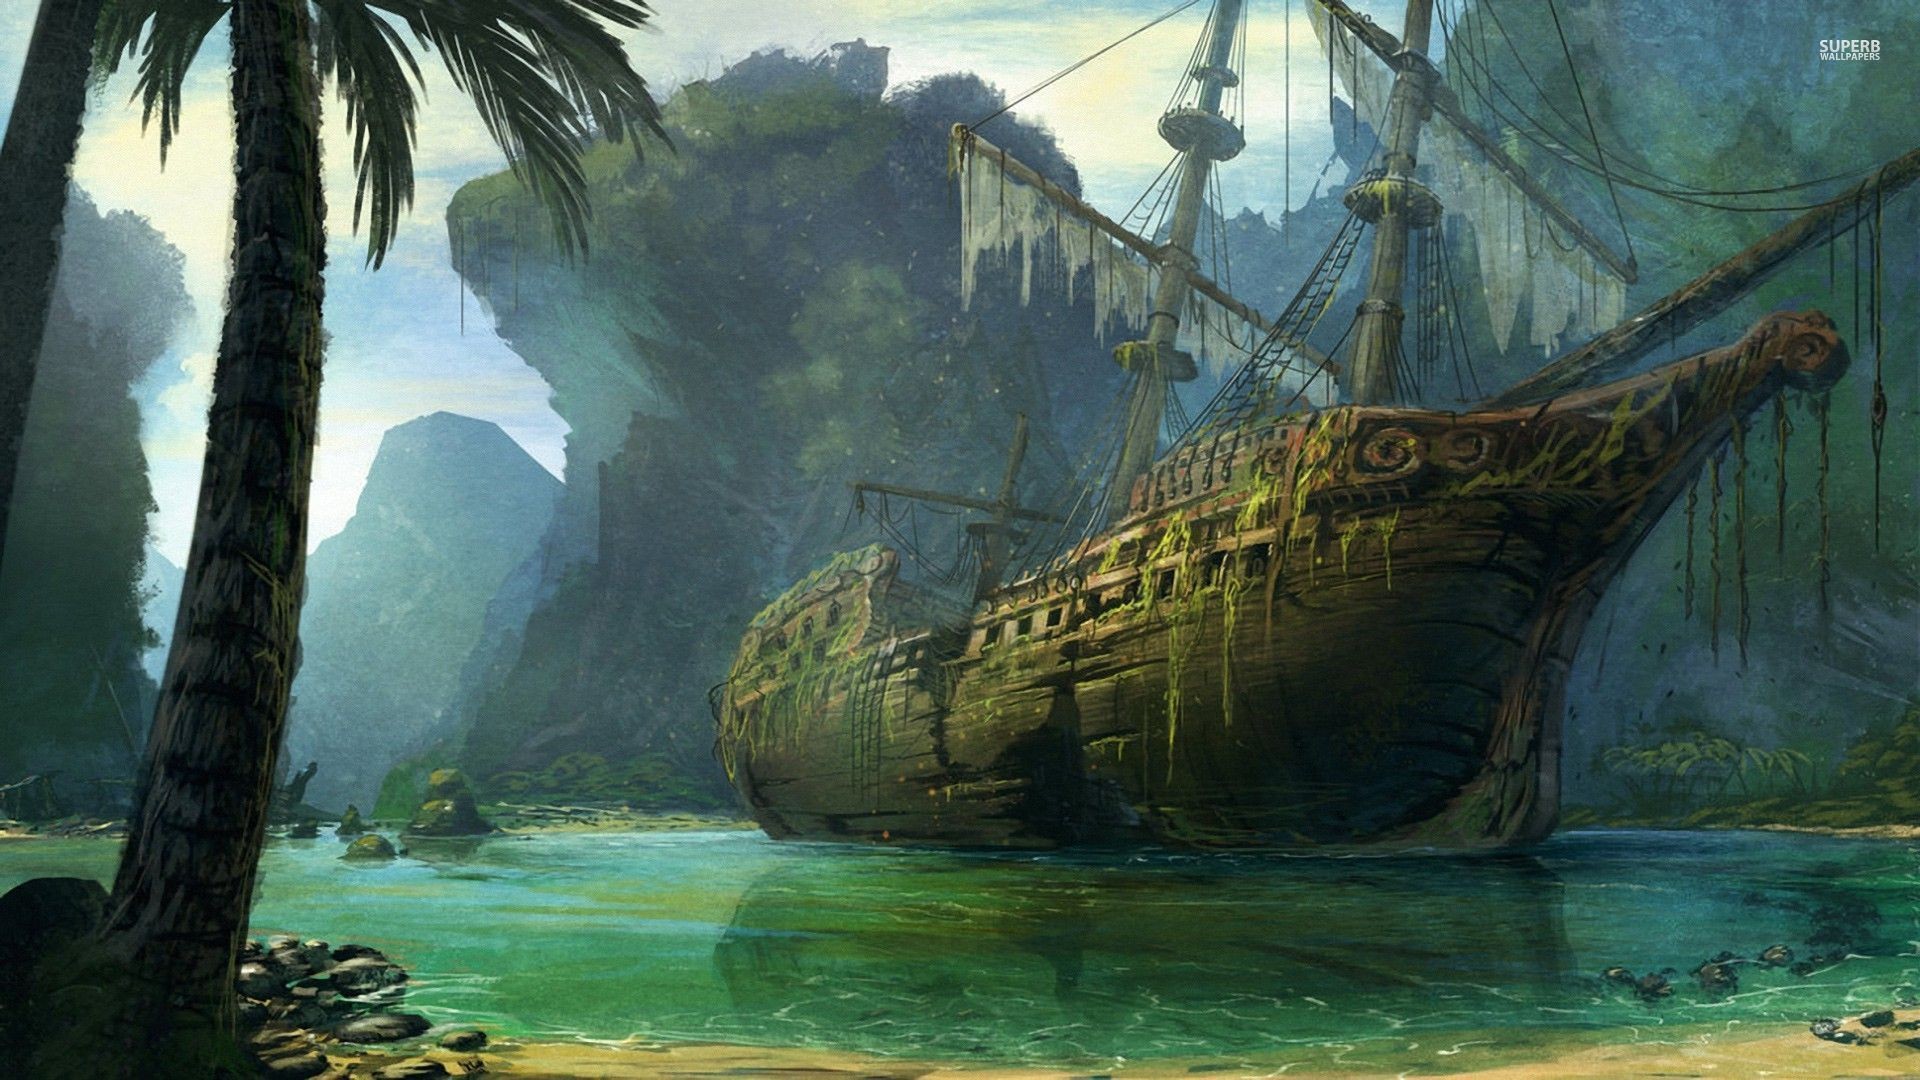 1920x1080 Pirate ship wreck wallpaper - Fantasy wallpapers - #29001